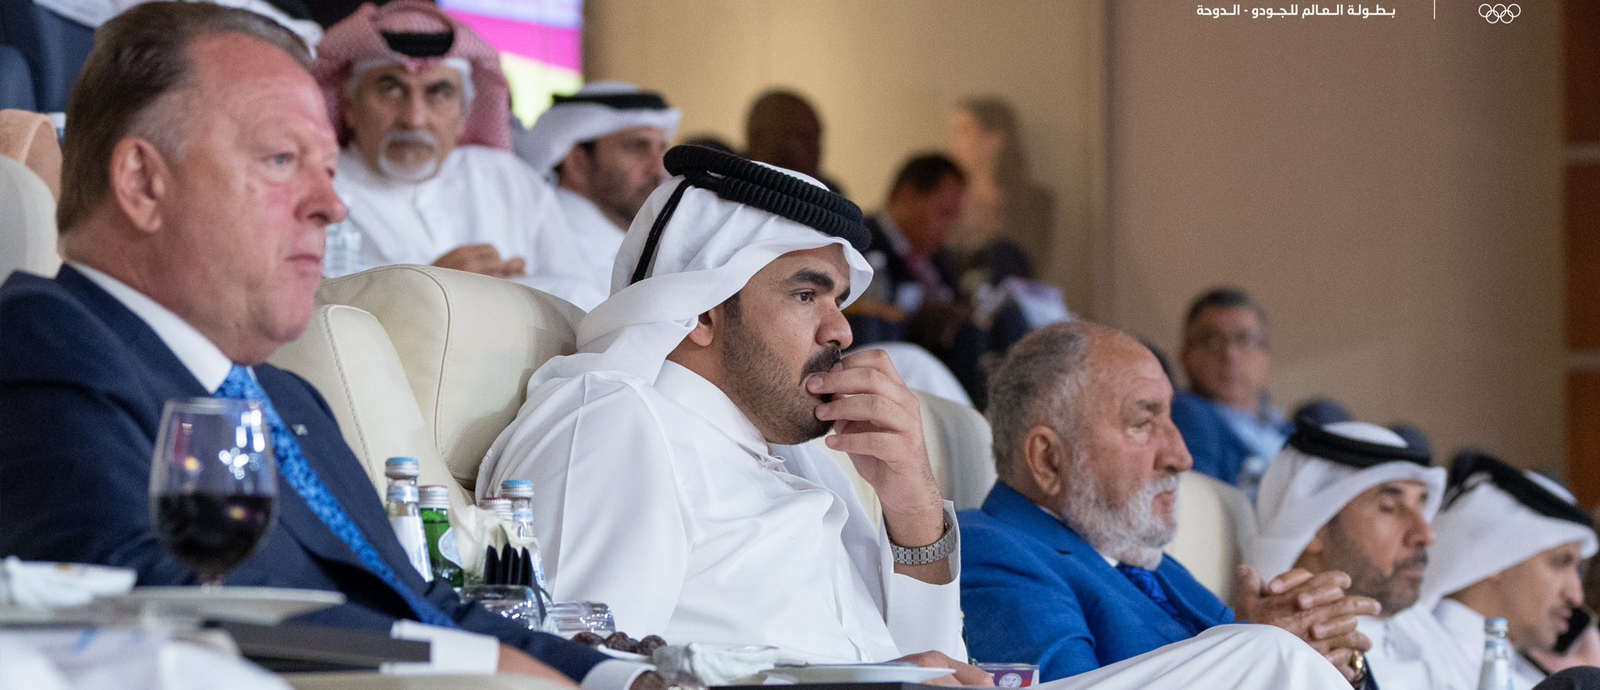 IJF President Praises Qatar's Distinguished Organization